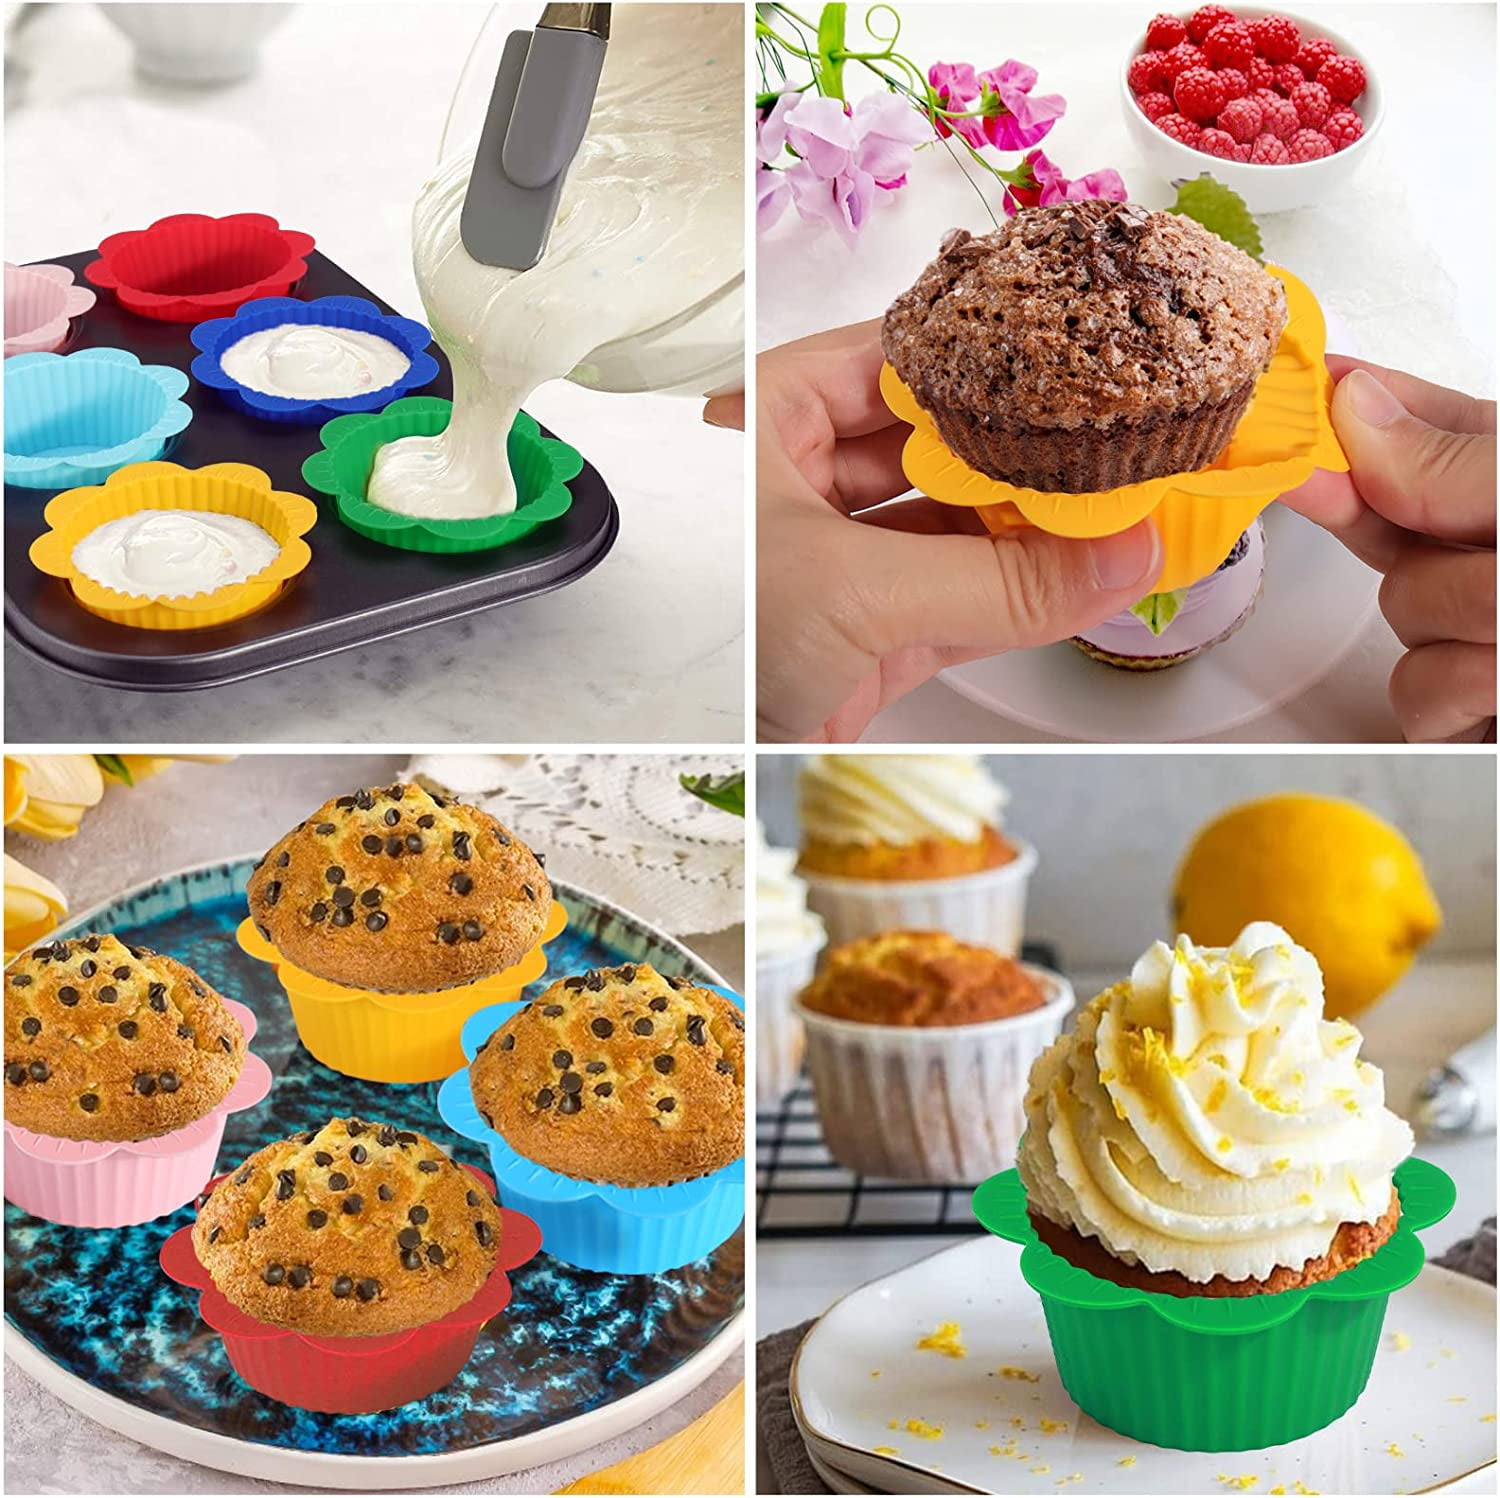 Anxbbo Reusable Cupcake Liners 36 Pcs Silicone Lunch Box Dividers, Non-Stick Food-grade Silicone Muffin Cups, Bento Box Accessories